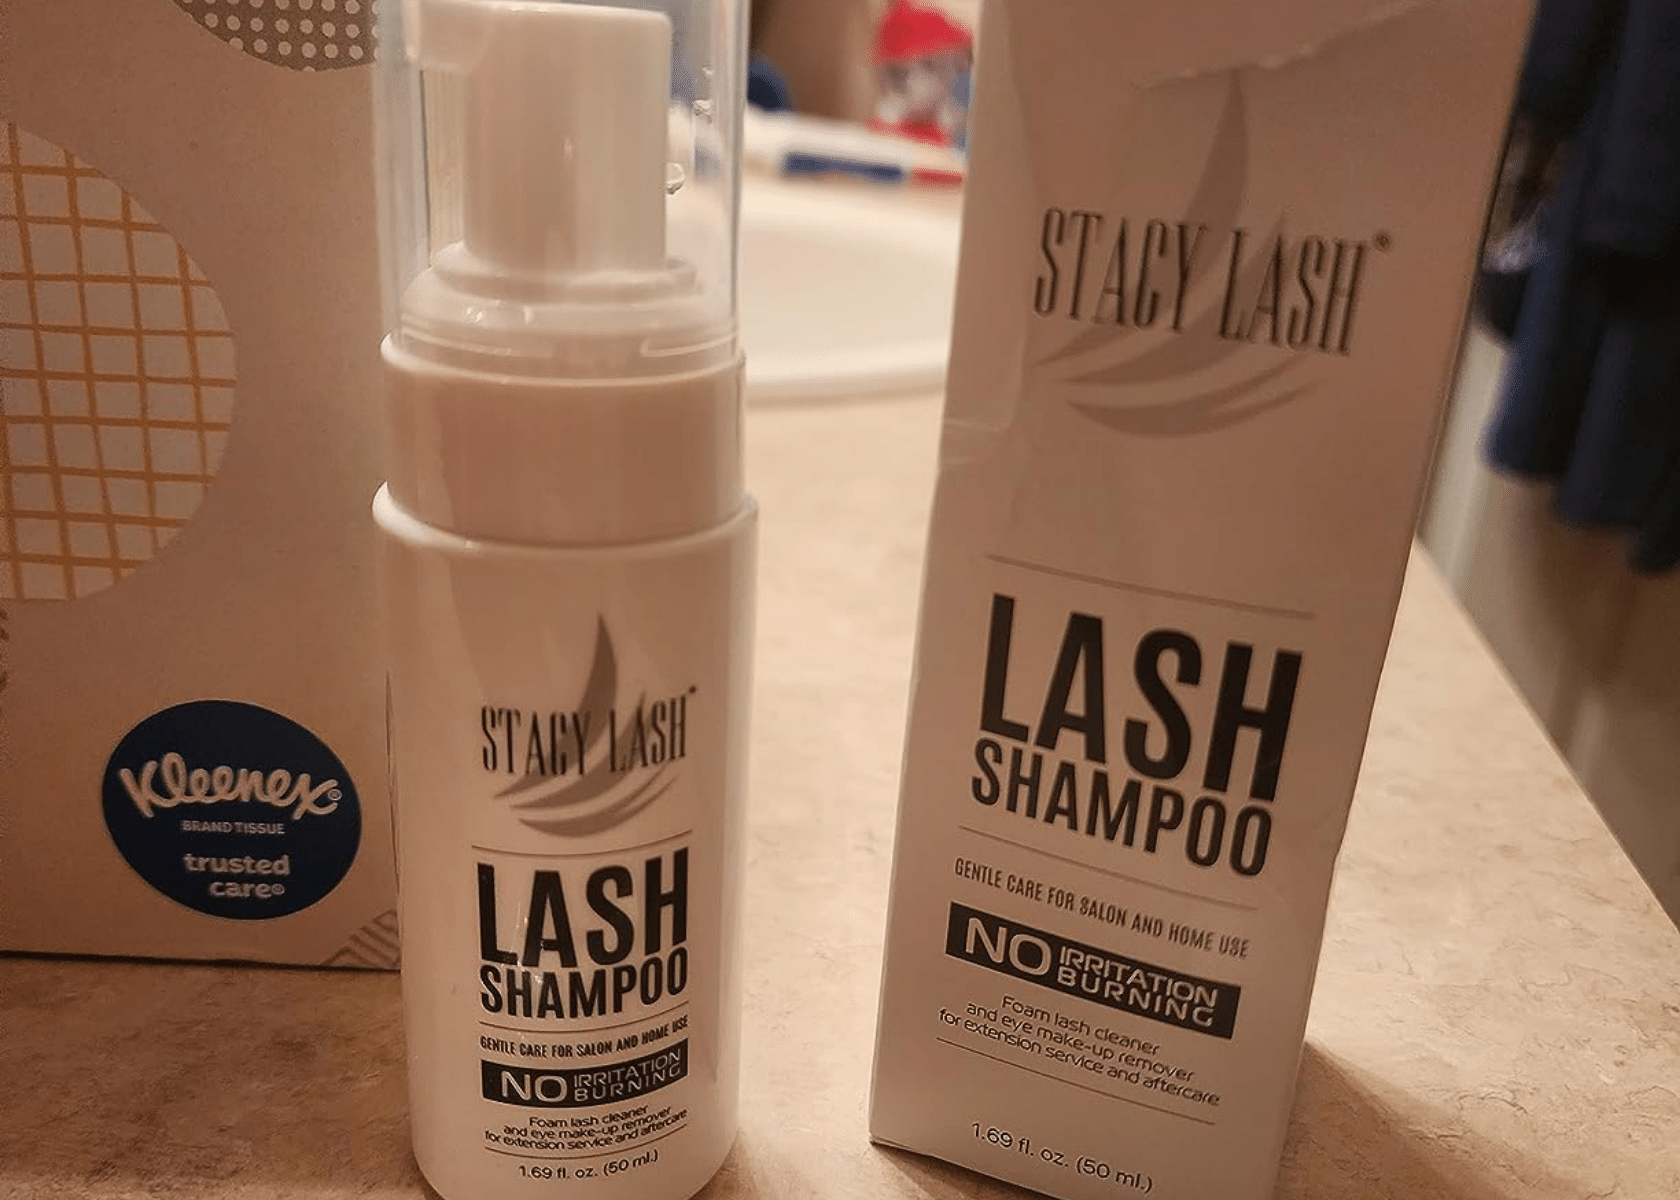 stacy lash shampoo